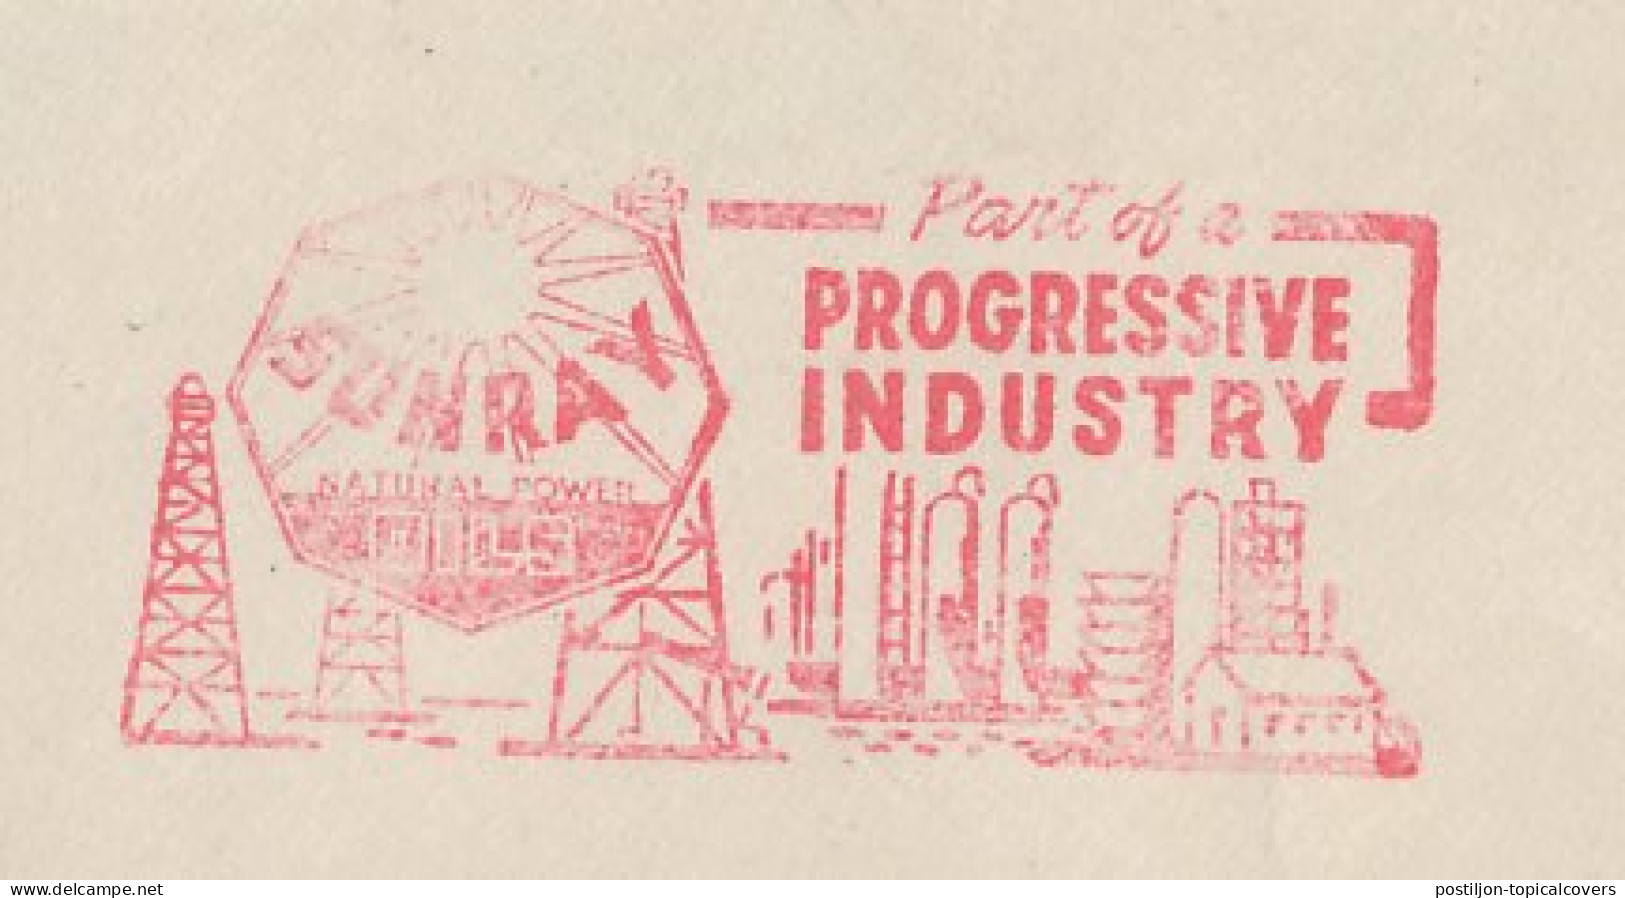 Meter Top Cut USA 1949 Oil - Sunray - Wells - Progressive Industry - Other & Unclassified